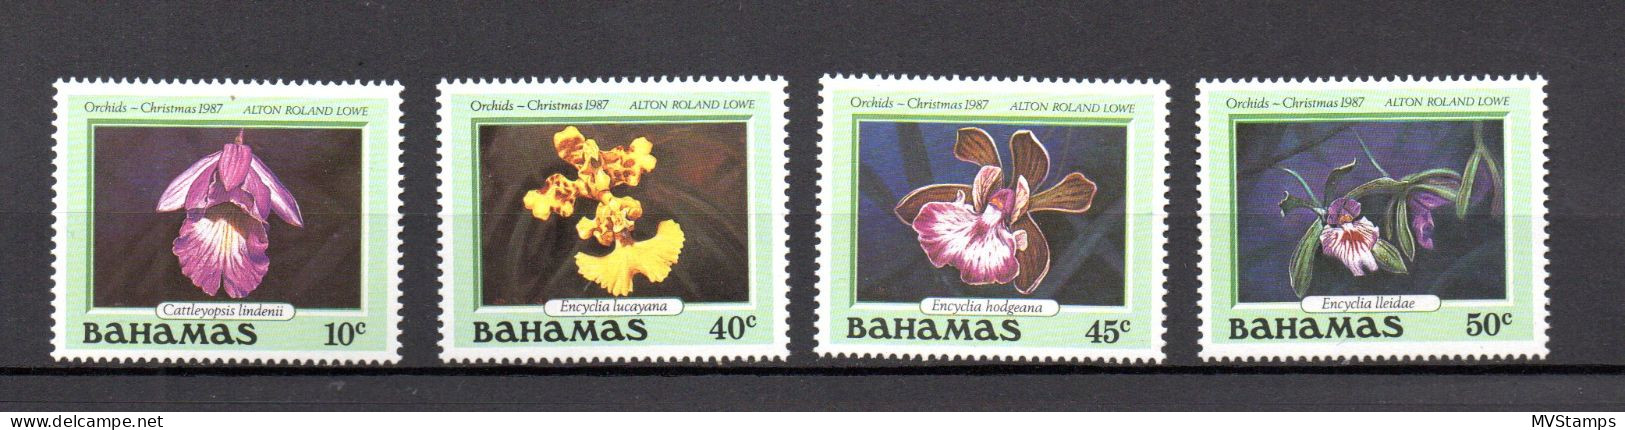 Bahamas 1987 Set Flowers/Orchids/Blumen Stamps (Michel 663/66) MNH - Bahamas (1973-...)